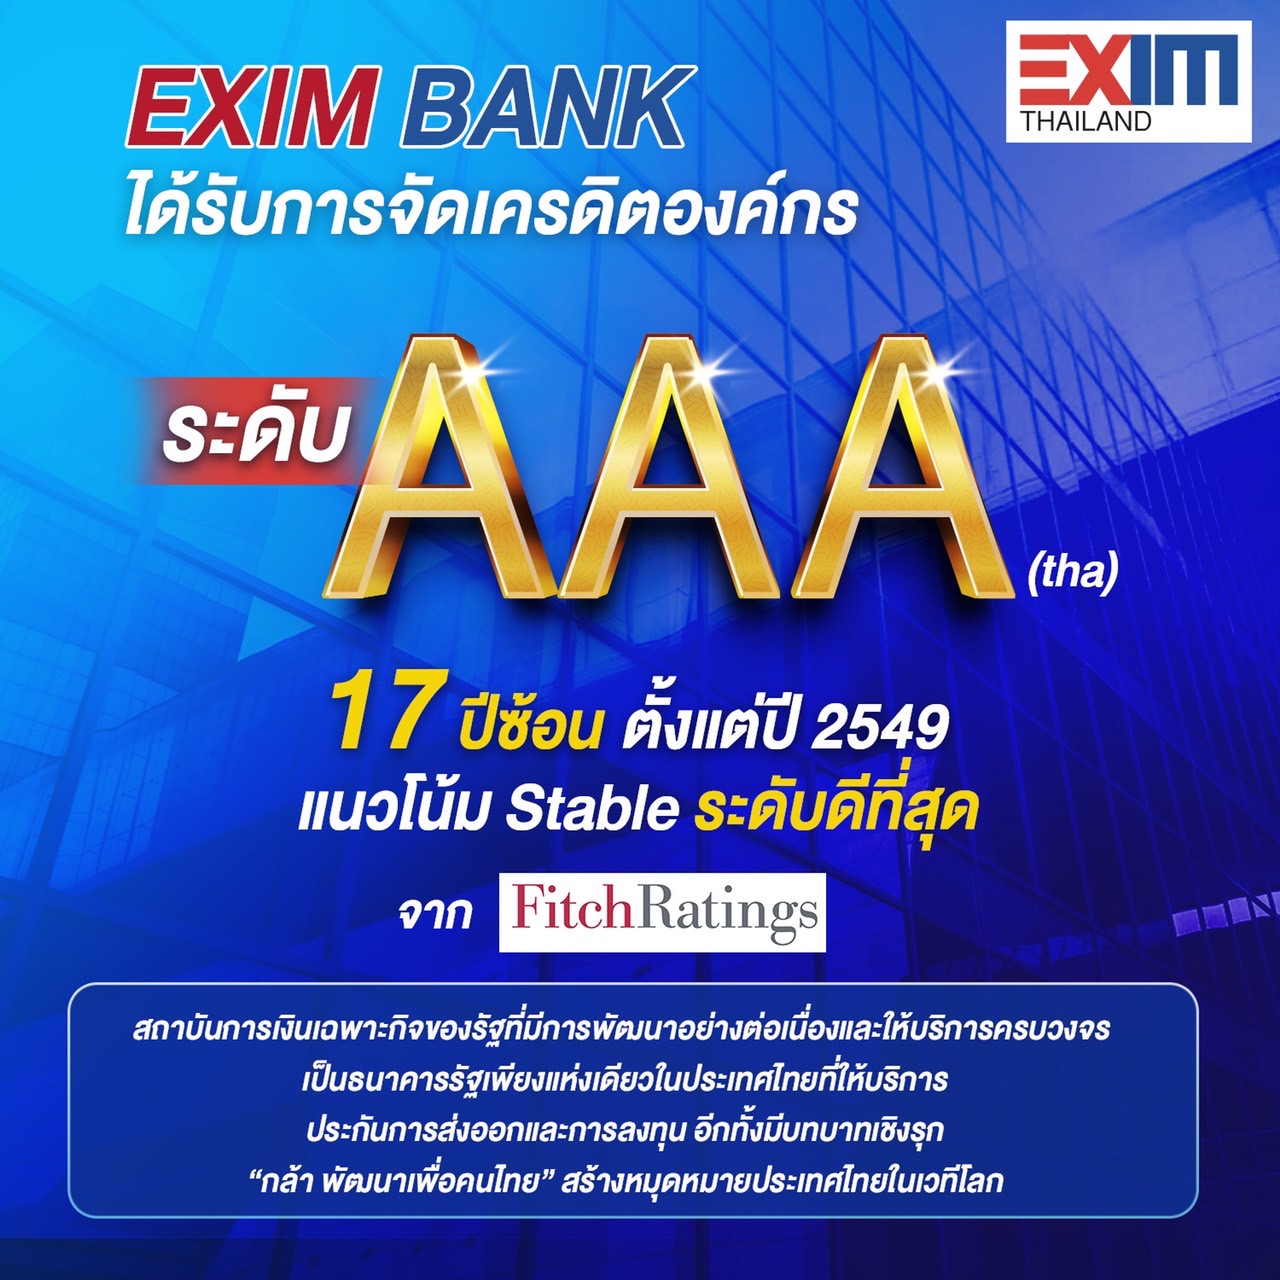 EXIM BANK โชว์สถานะทางการเงินแข็งแกร่งคงอันดับ   